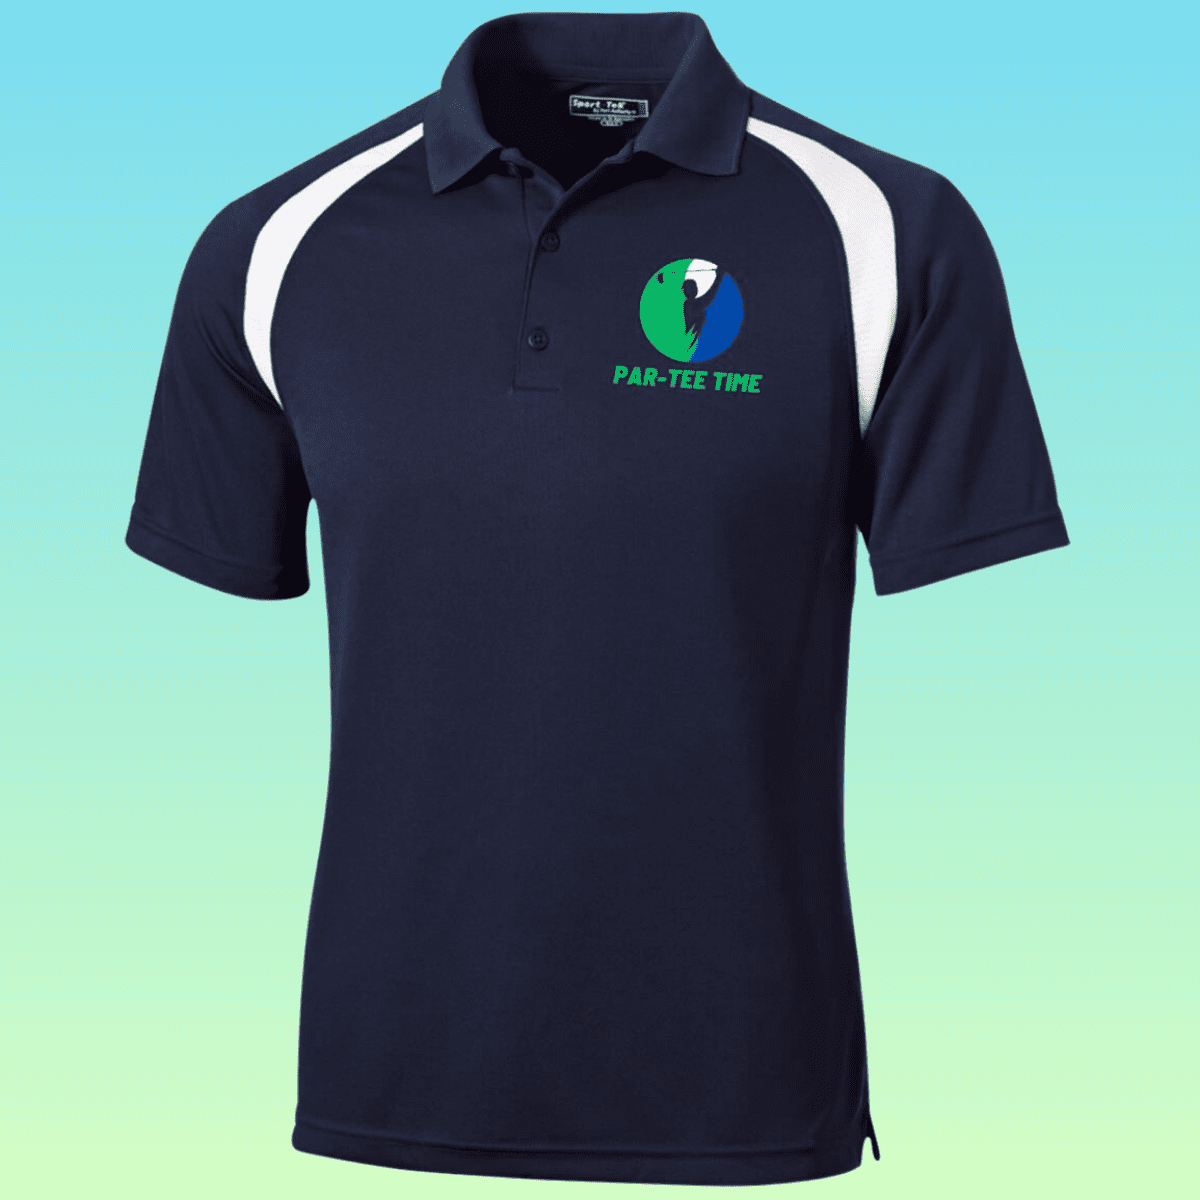 Men's Navy and White Golf Par-tee Time Moisture-Wicking Polo Shirt